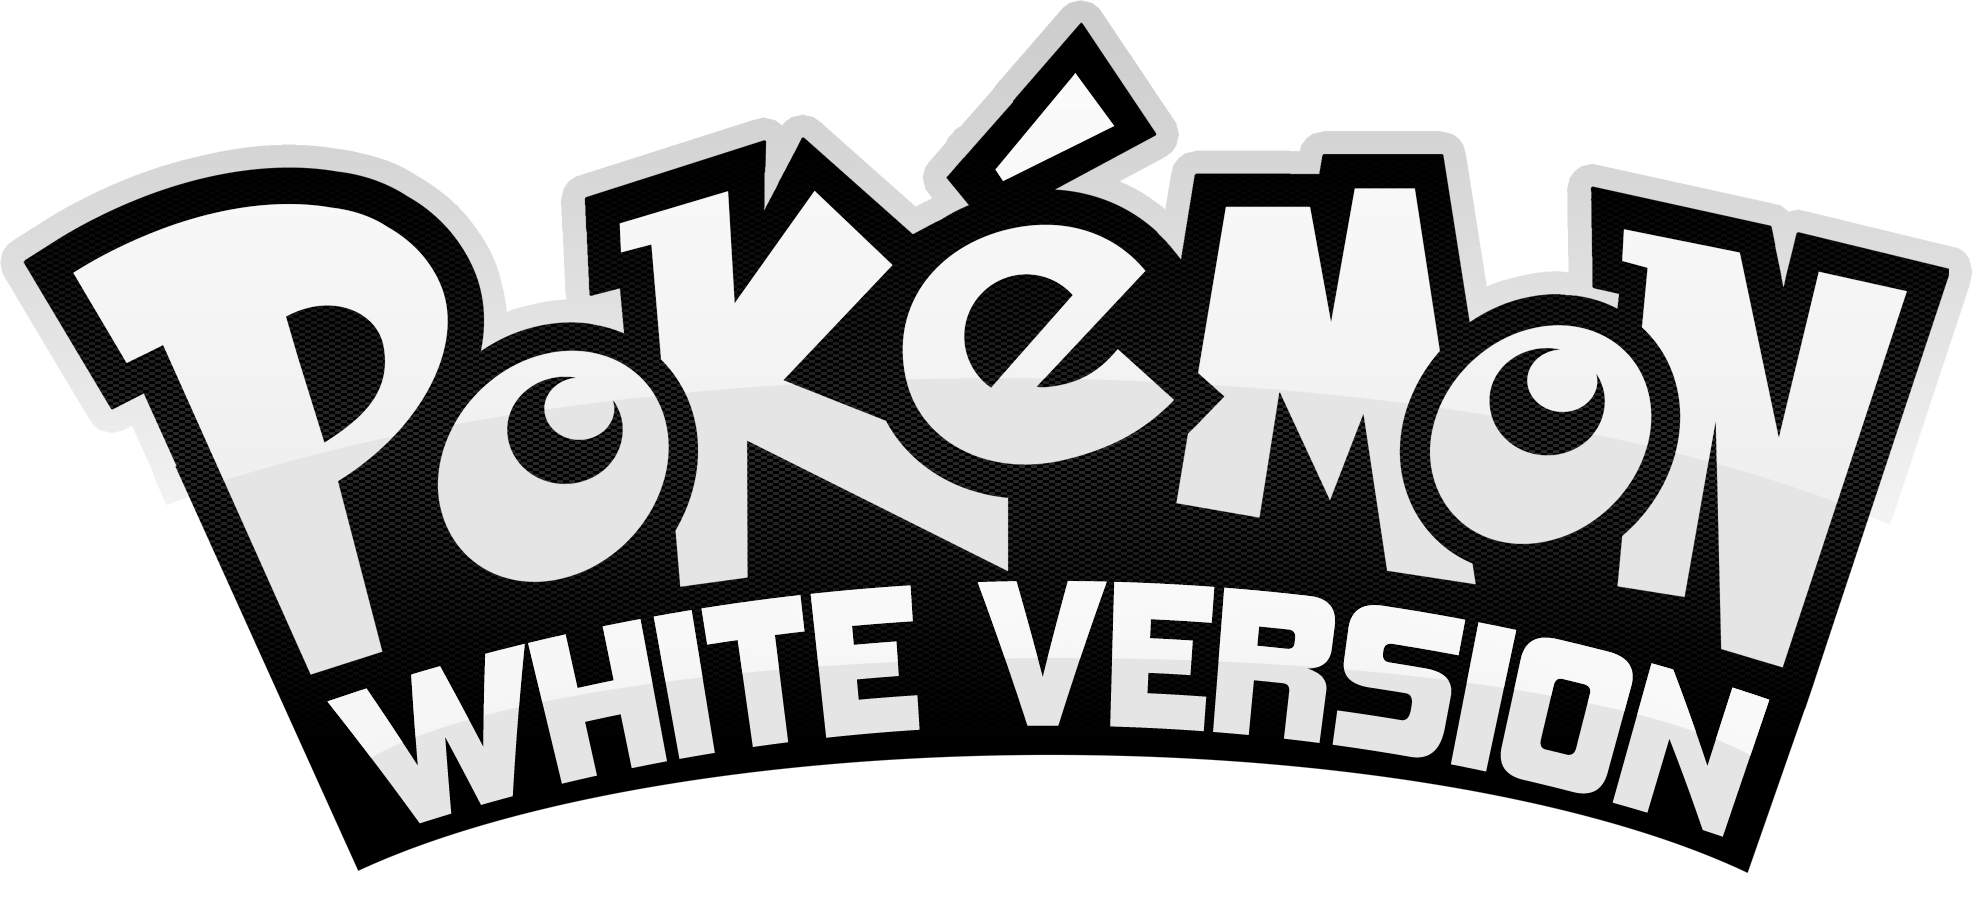 Pokemon Black and White Logo - Pokémon Autograph Editor 1.1 | GBAtemp.net - The Independent Video ...